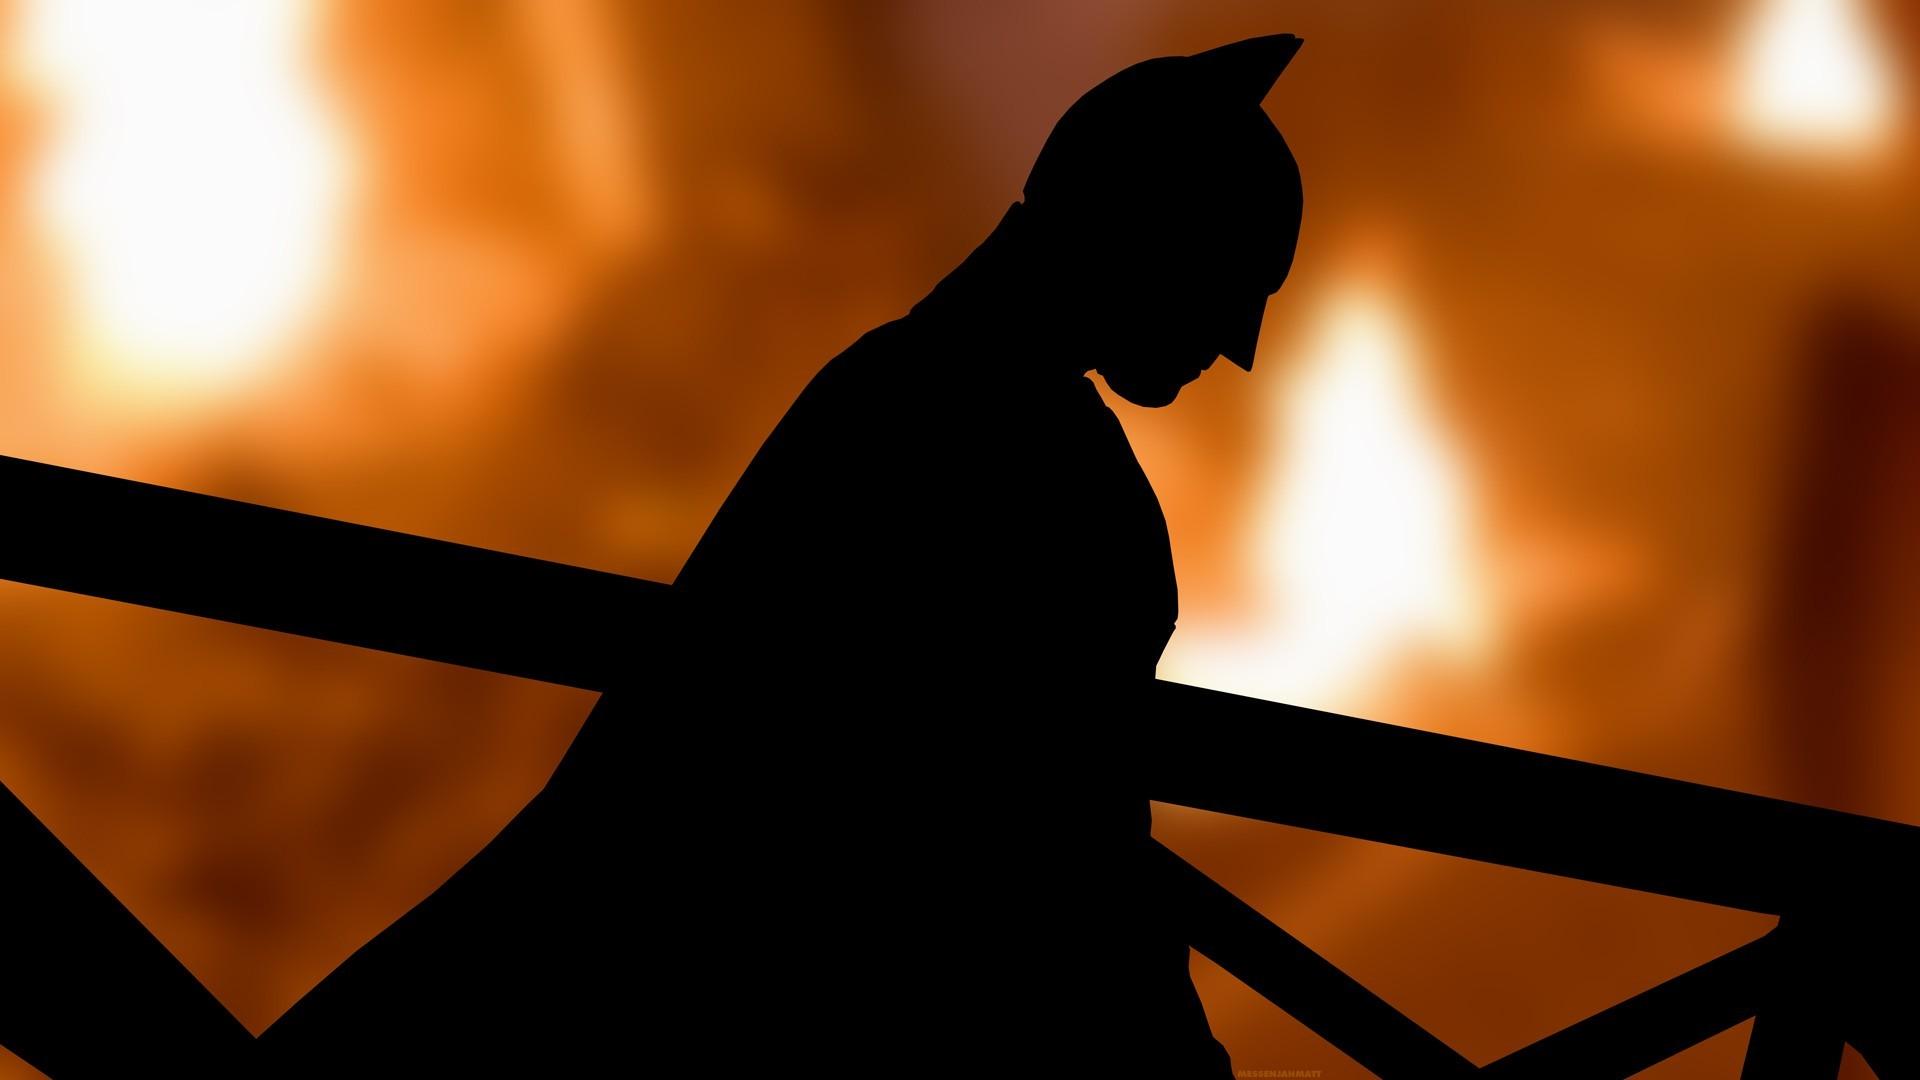 ? Batman silhouette superheroes blurred background wallpaper | (105180)